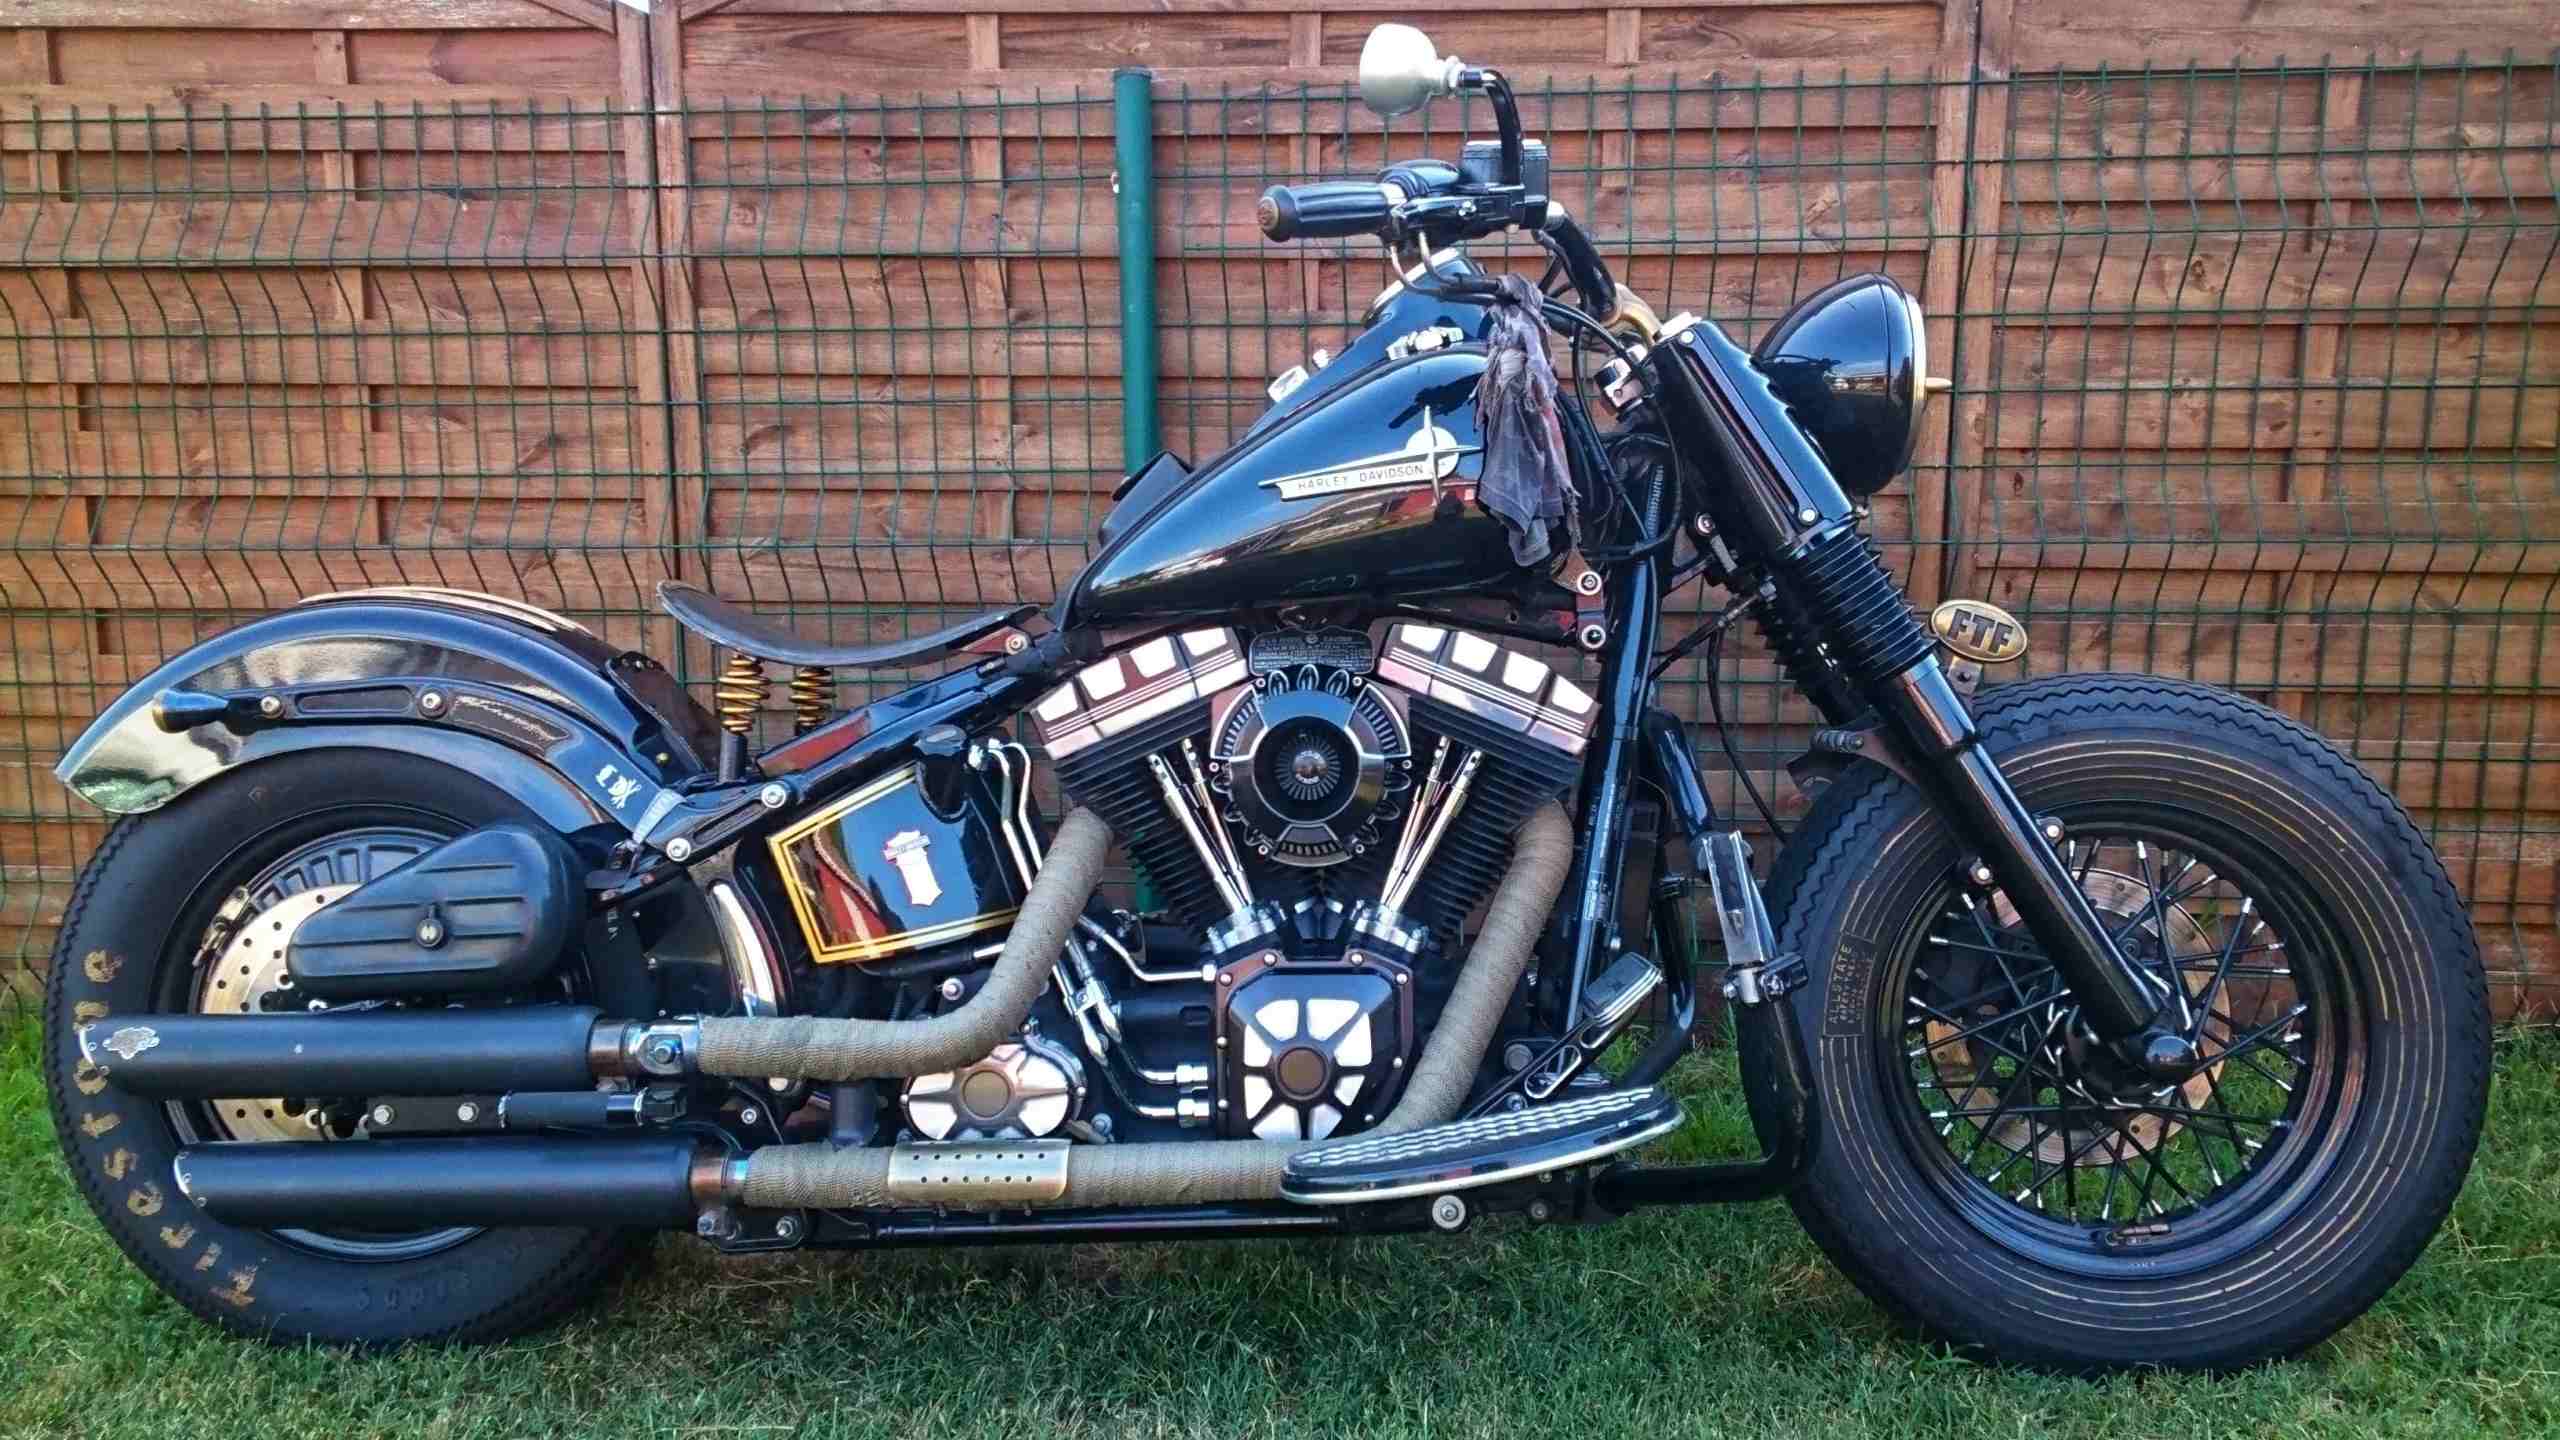 Harley Davidson Softail Slim de 2013